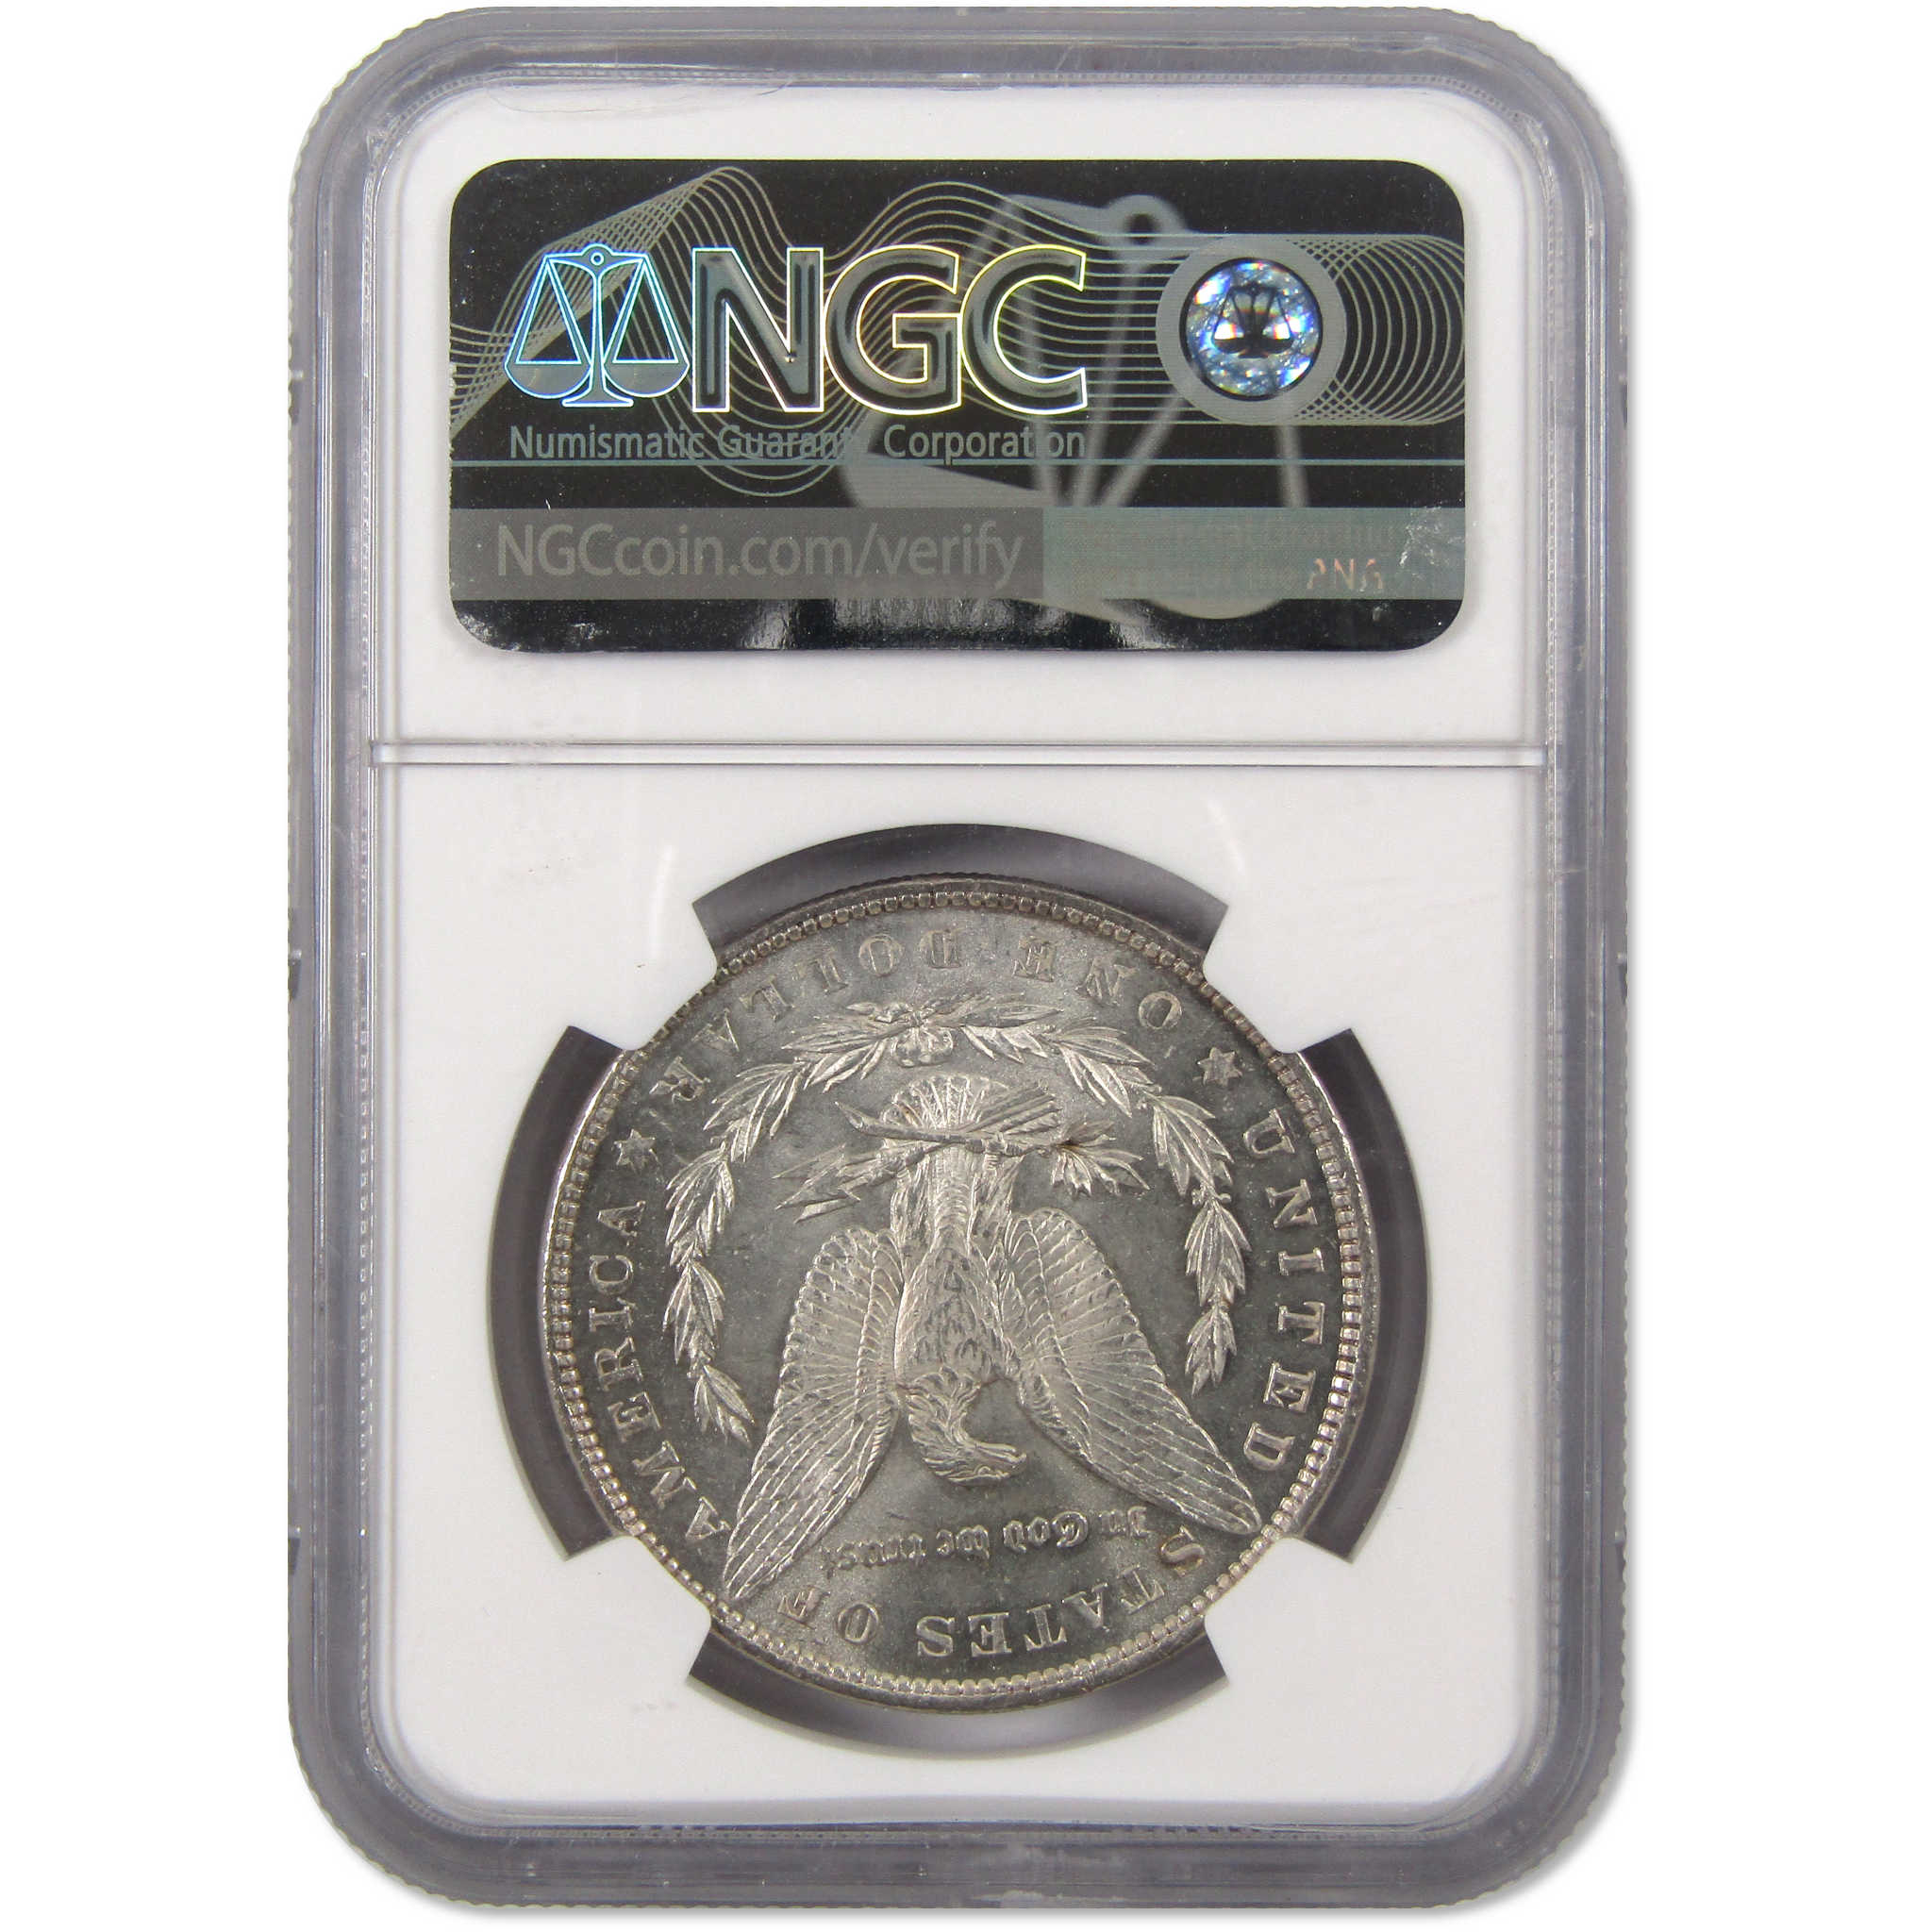 1878 7TF Rev 79 Morgan Dollar MS 62 NGC 90% Silver $1 Coin SKU:I9477 - Morgan coin - Morgan silver dollar - Morgan silver dollar for sale - Profile Coins &amp; Collectibles